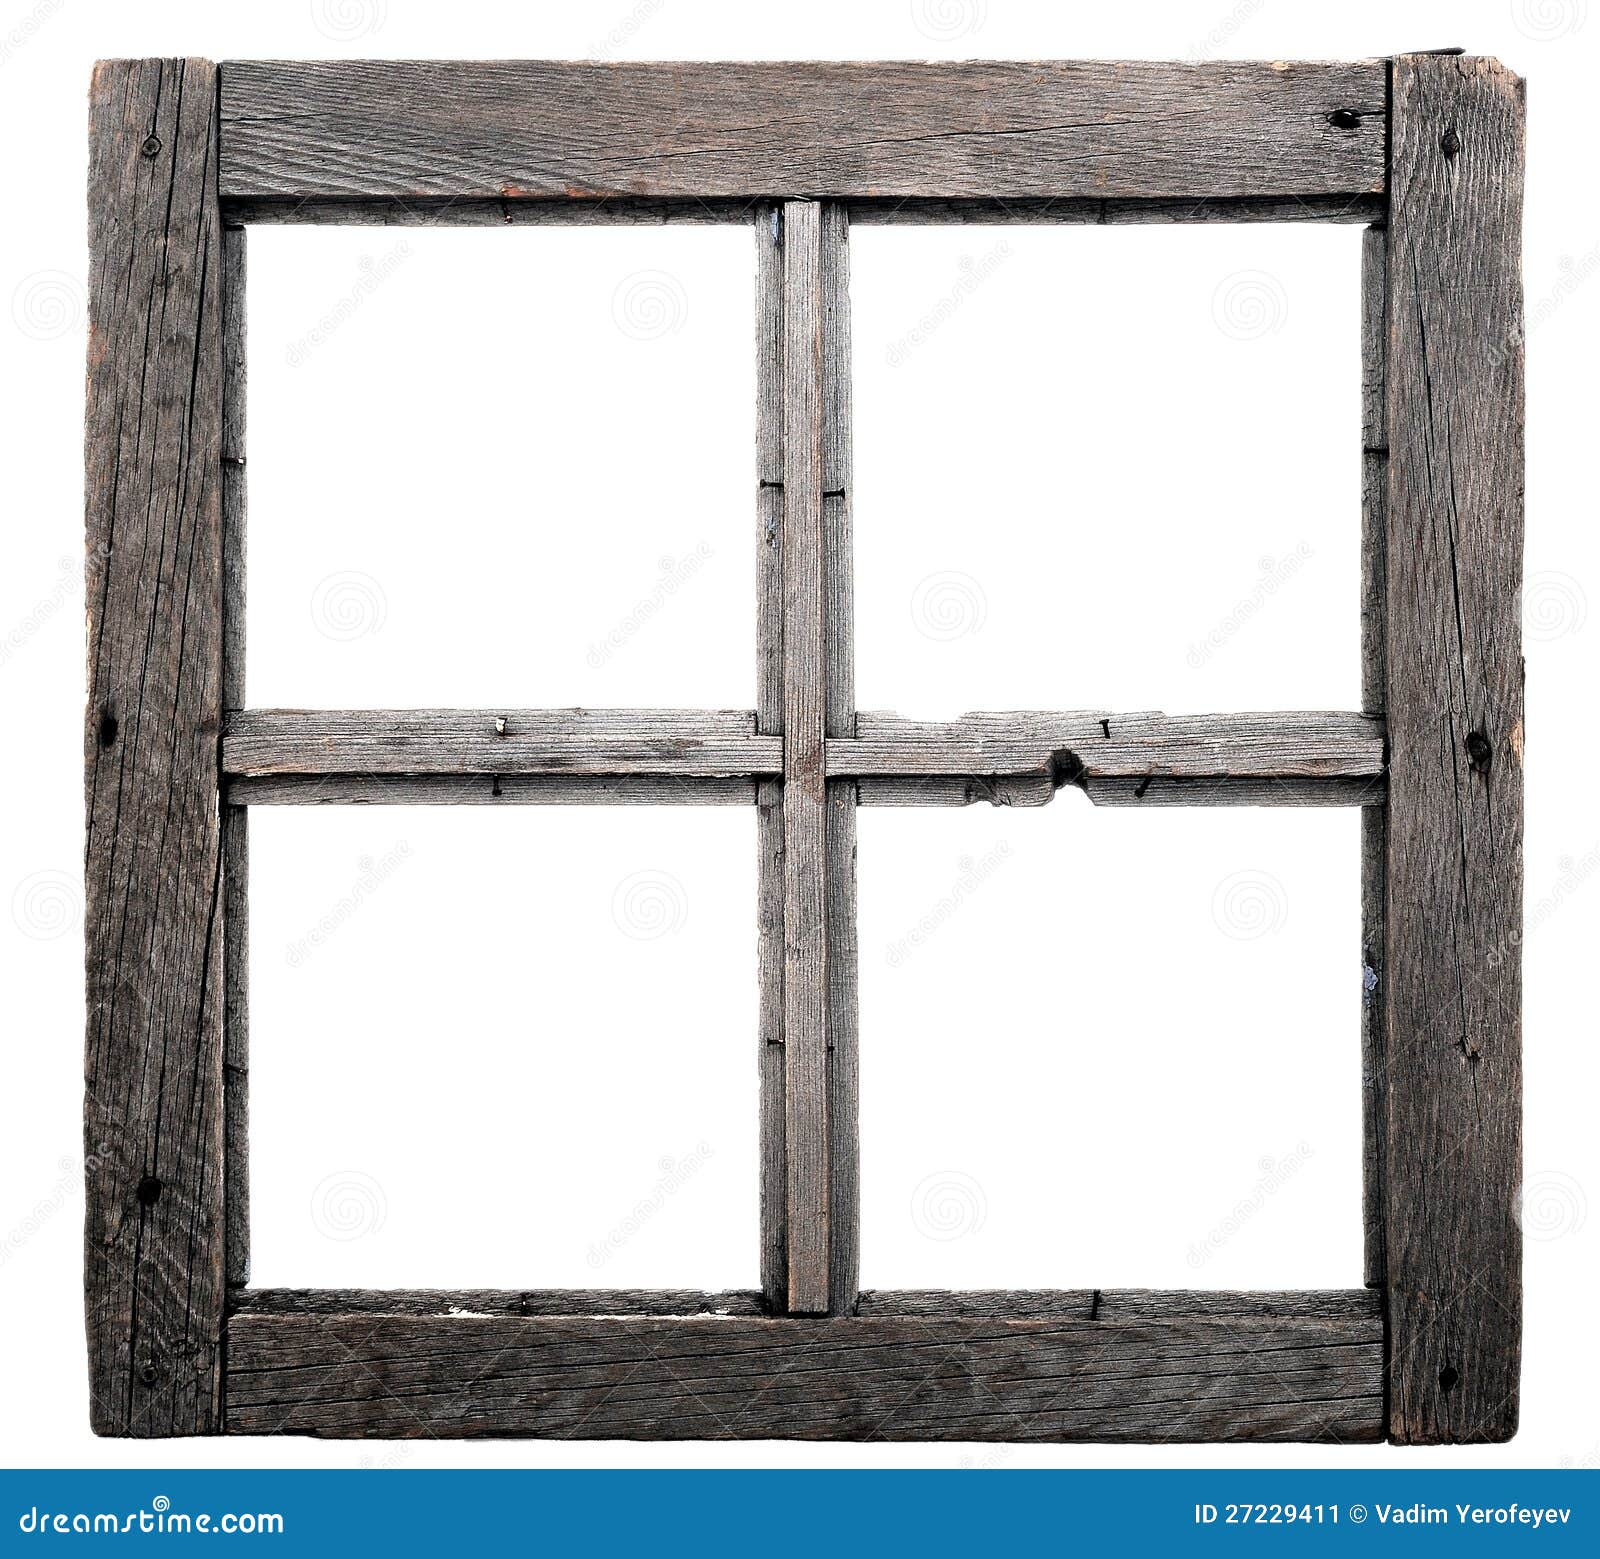 clipart window frame - photo #3